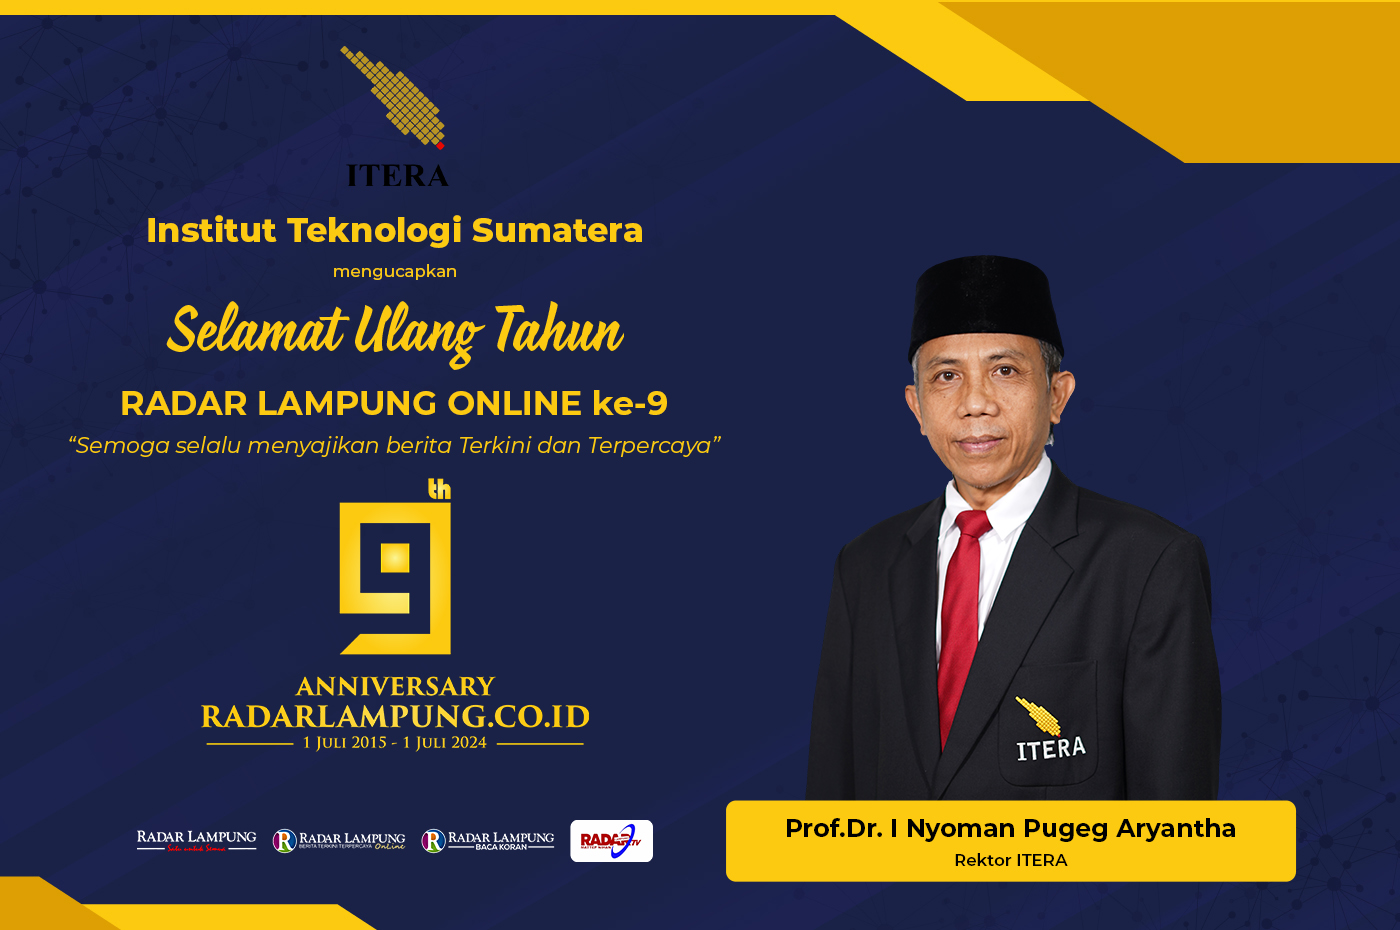 Institut Teknologi Sumatera (ITERA) Mengucapkan Selamat Ulang Tahun ke-9 Radar Lampung Online